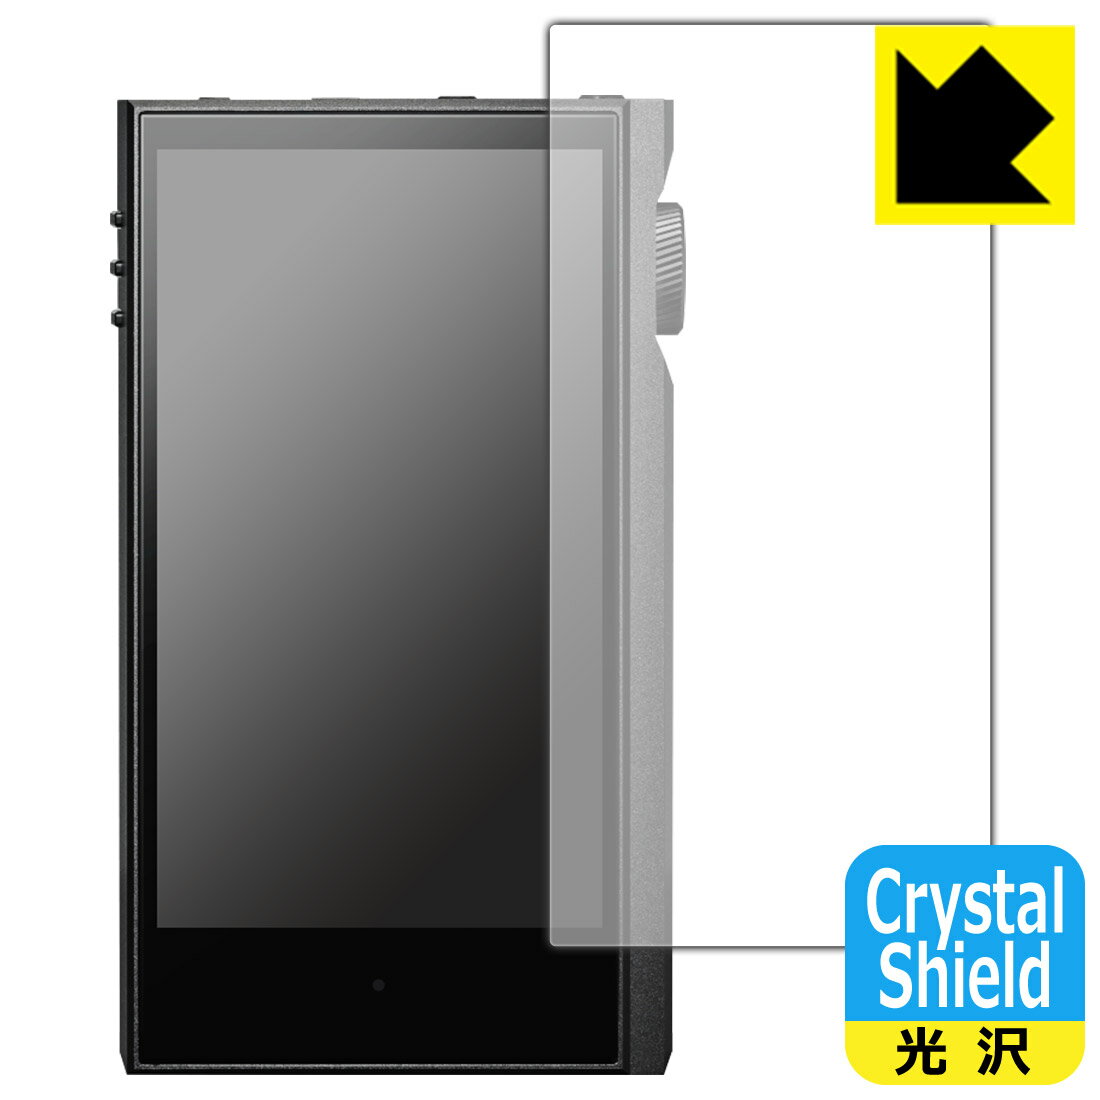 Crystal Shield【光沢】保護フィルム Astell&Kern KANN MAX (前面のみ) 3枚セット 日本製 自社製造直販